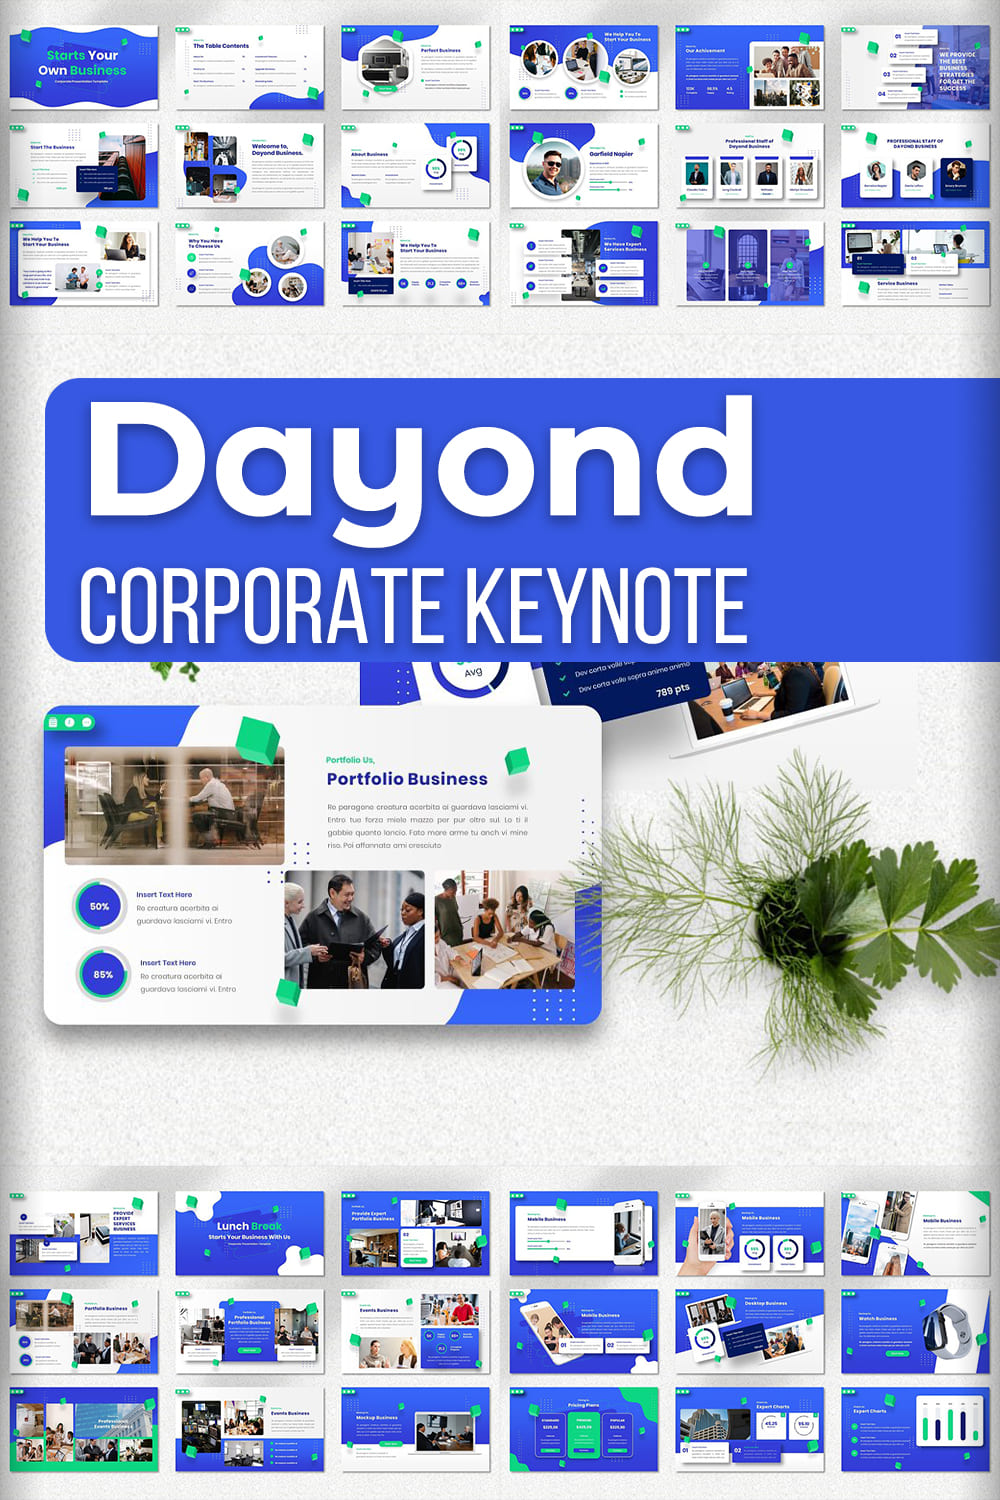 Pinterest - Dayond - Corporate Keynote.